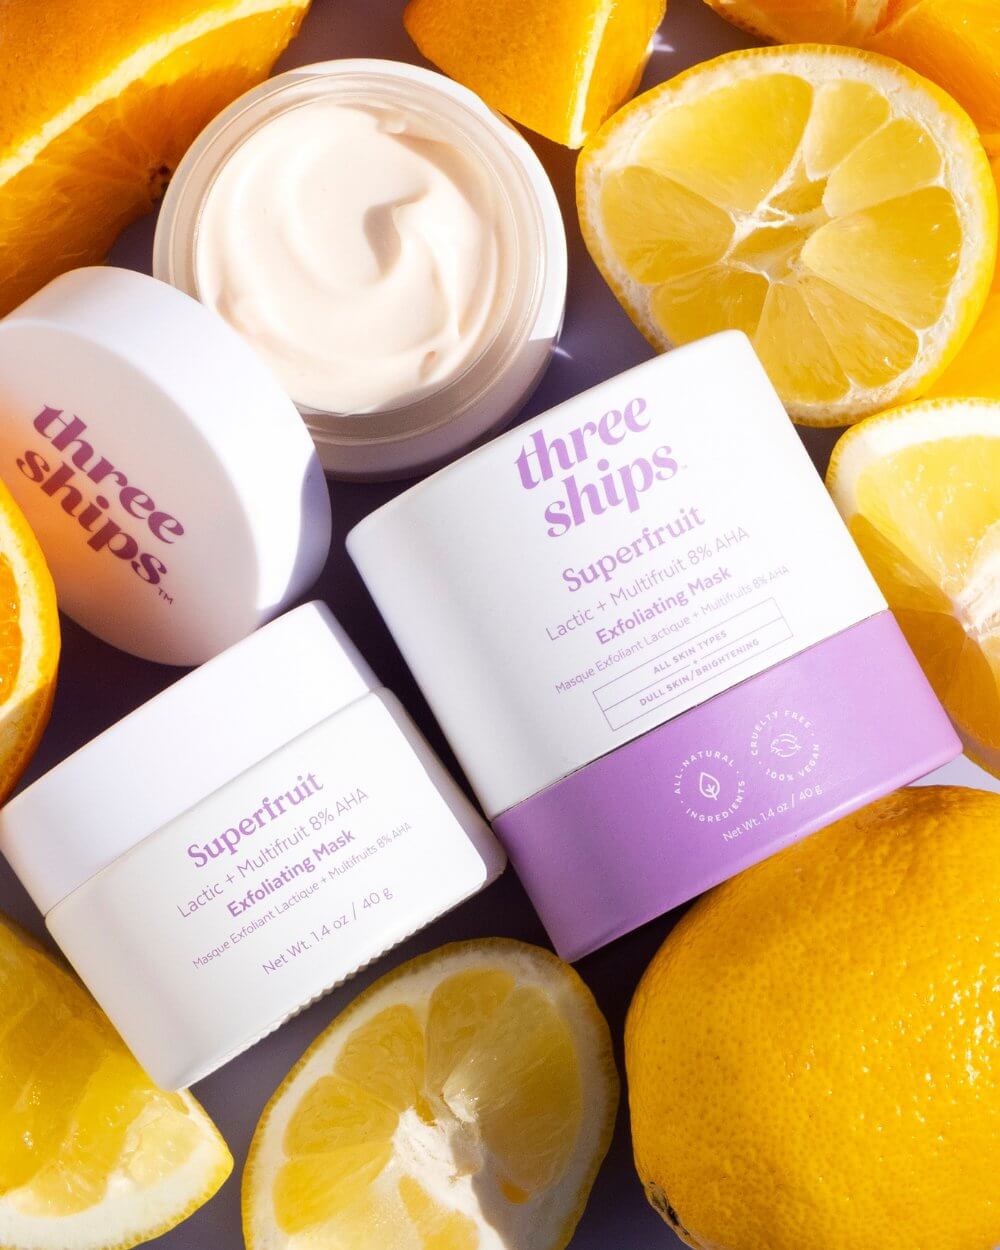 Superfruit Lactic + Multifruit 8% AHA Exfoliating Mask Three Ships MASKS Natural Vegan Cruelty-free Skincare